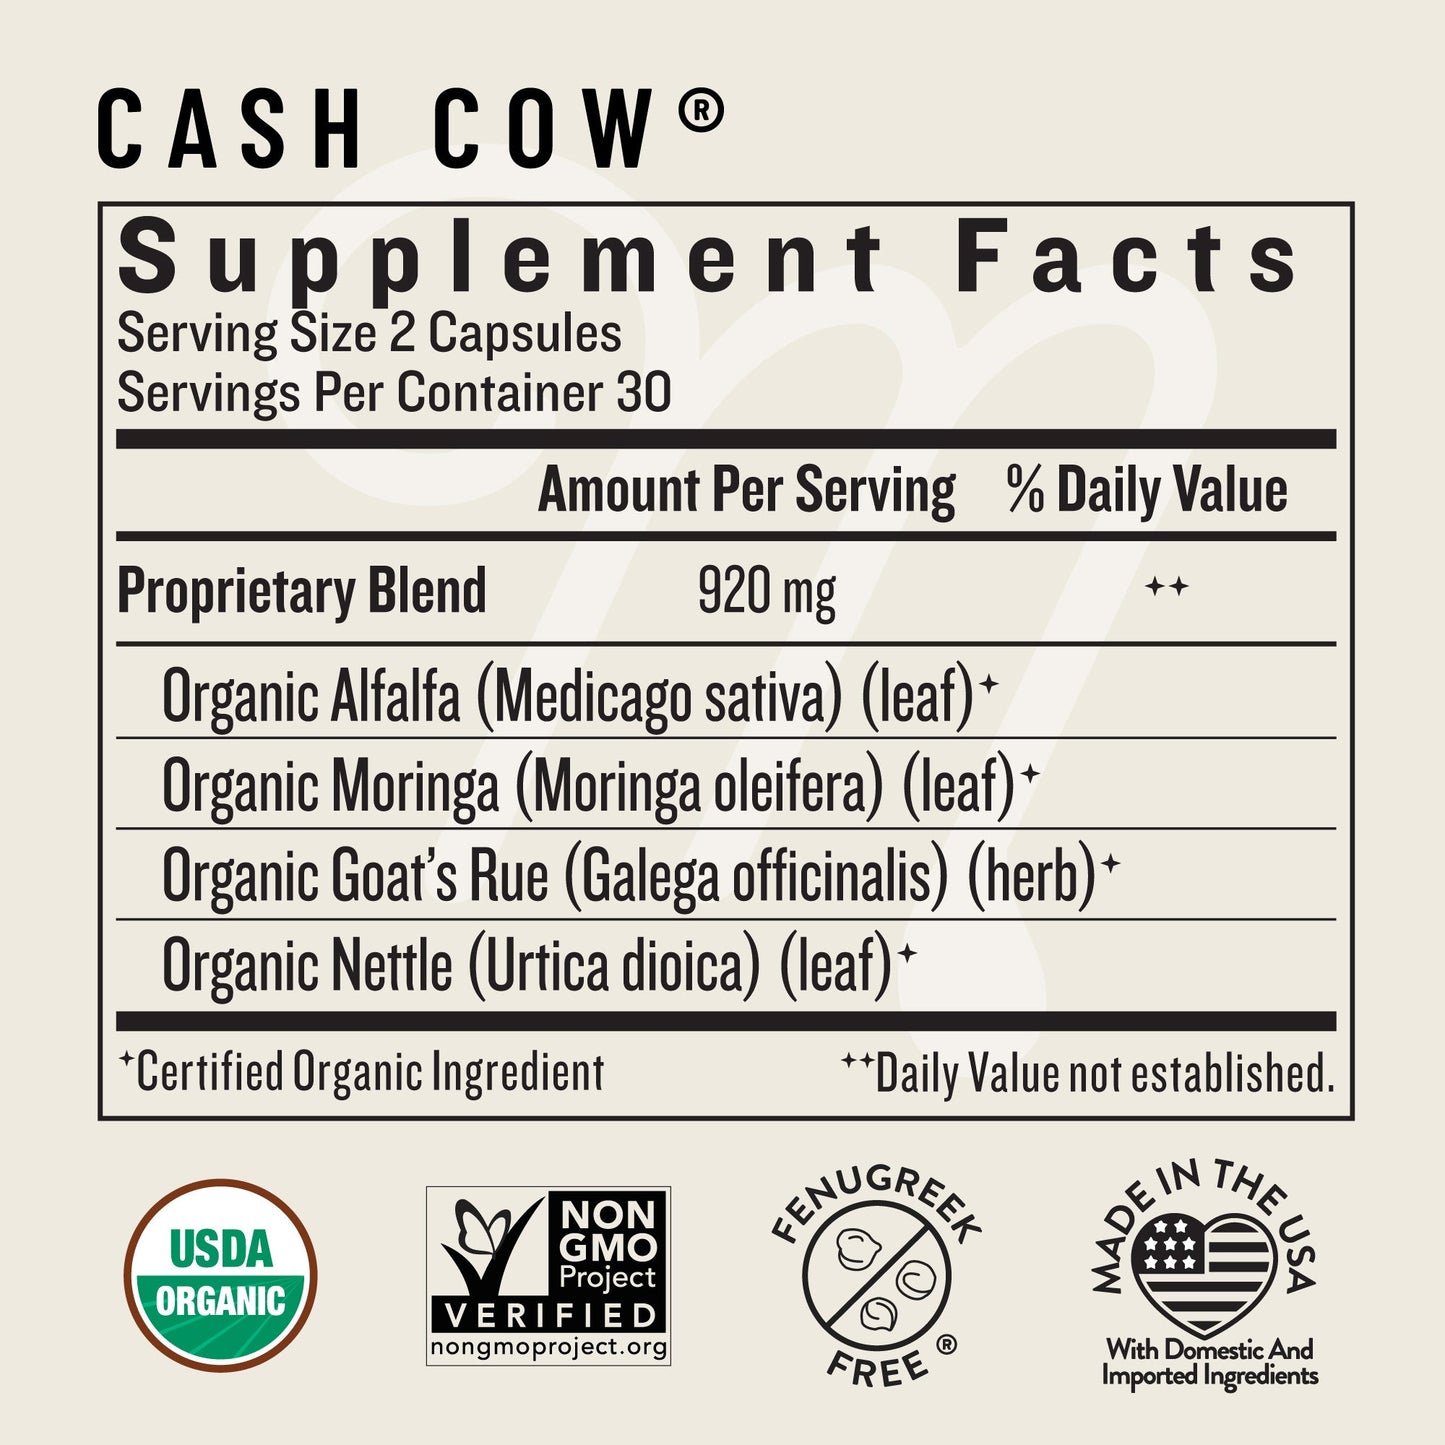 Cash Cow® - Legendairy Milk